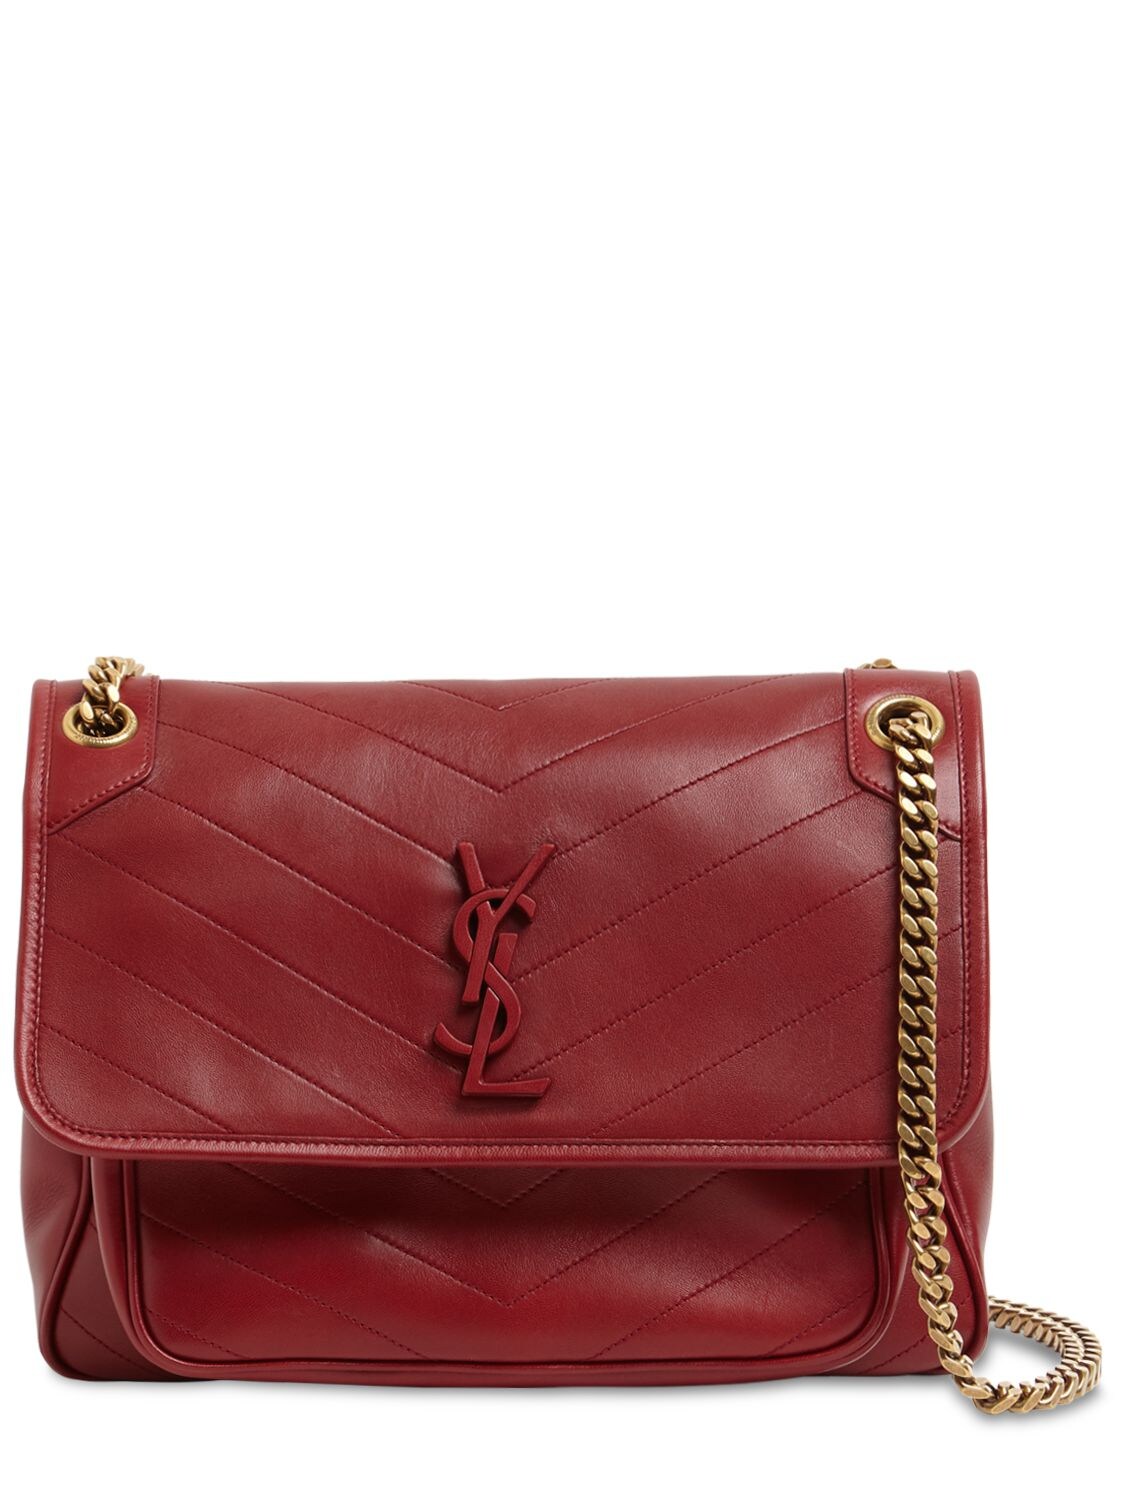 Saint Laurent Medium Niki Monogram Leather Bag In Opyum Red